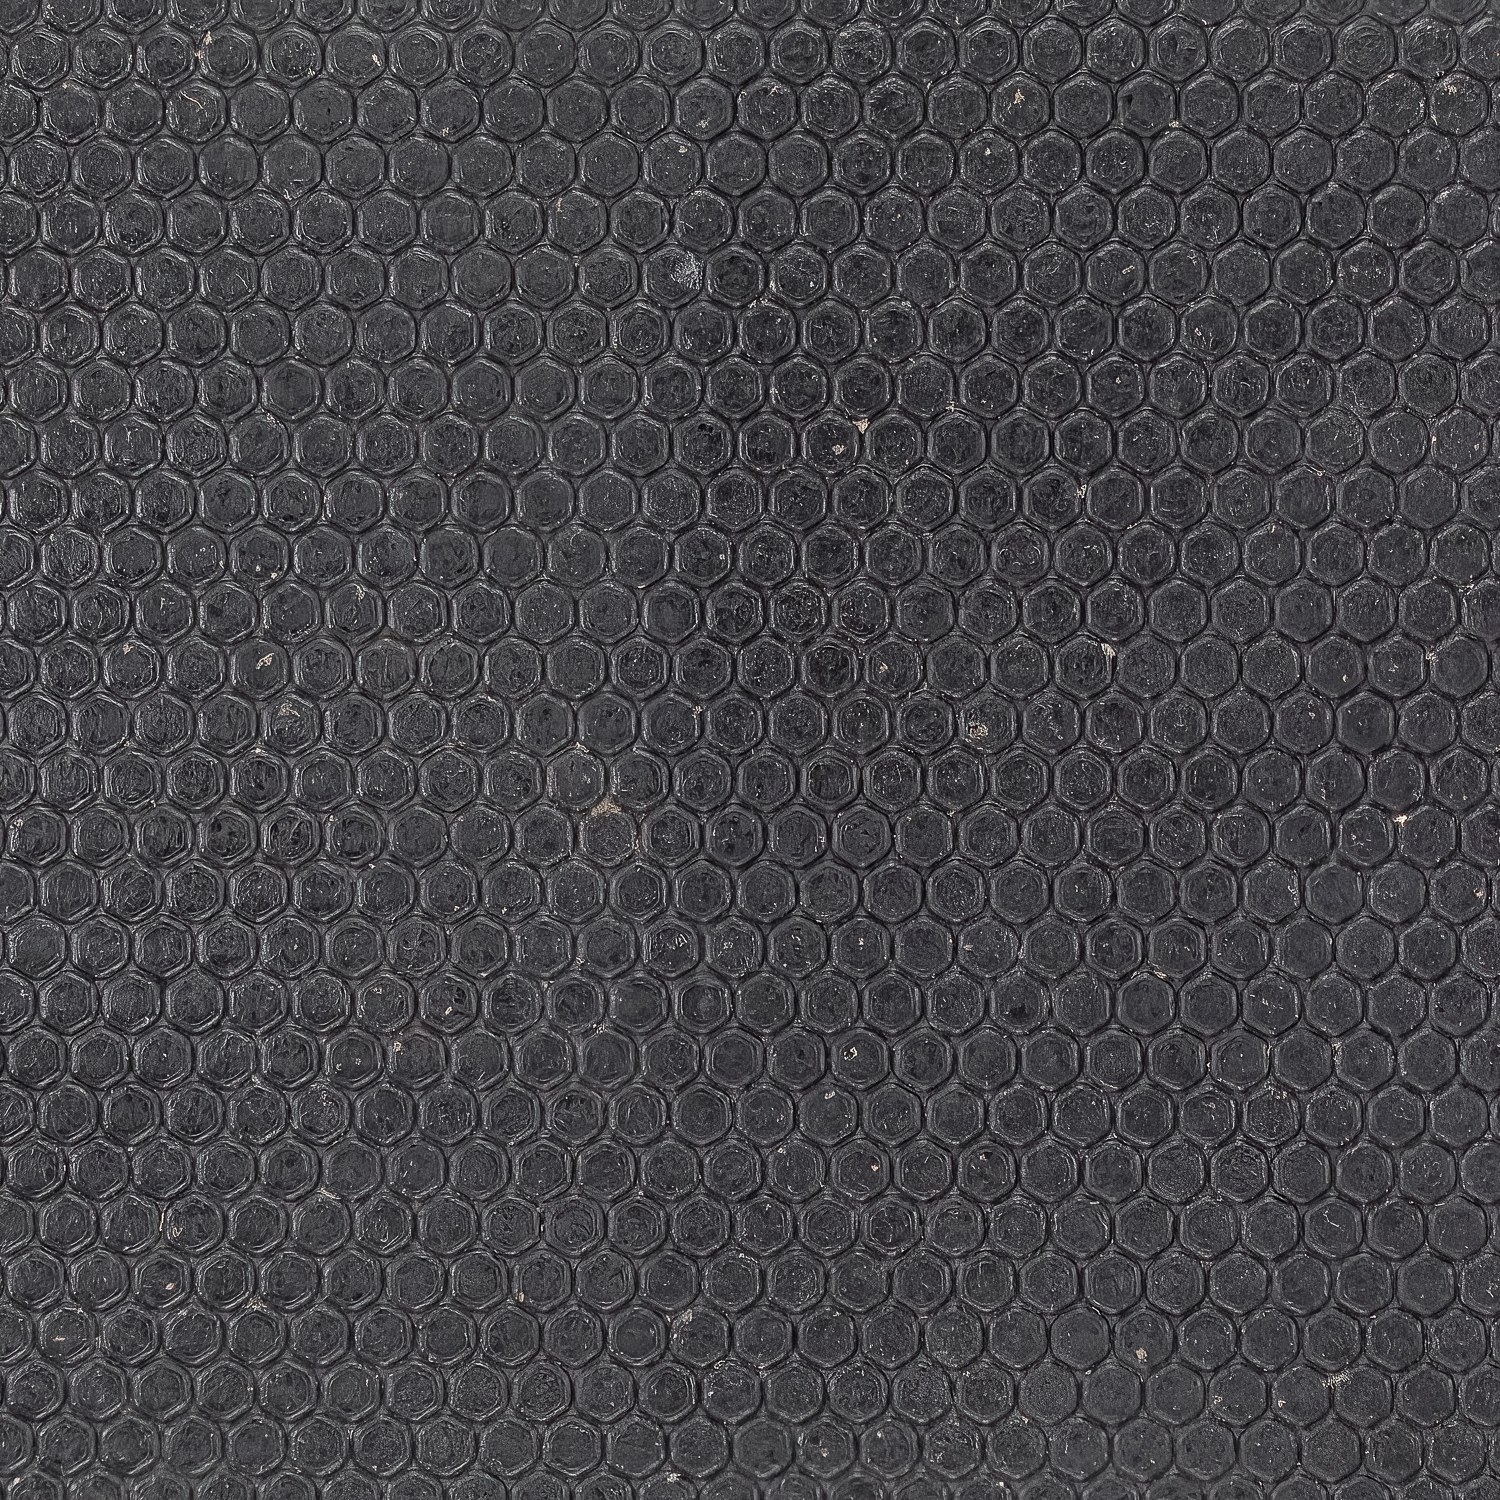 Sundance Horse Stall Mat Kit 12x16 Ft Black Tile Interlocking hexagon top close up